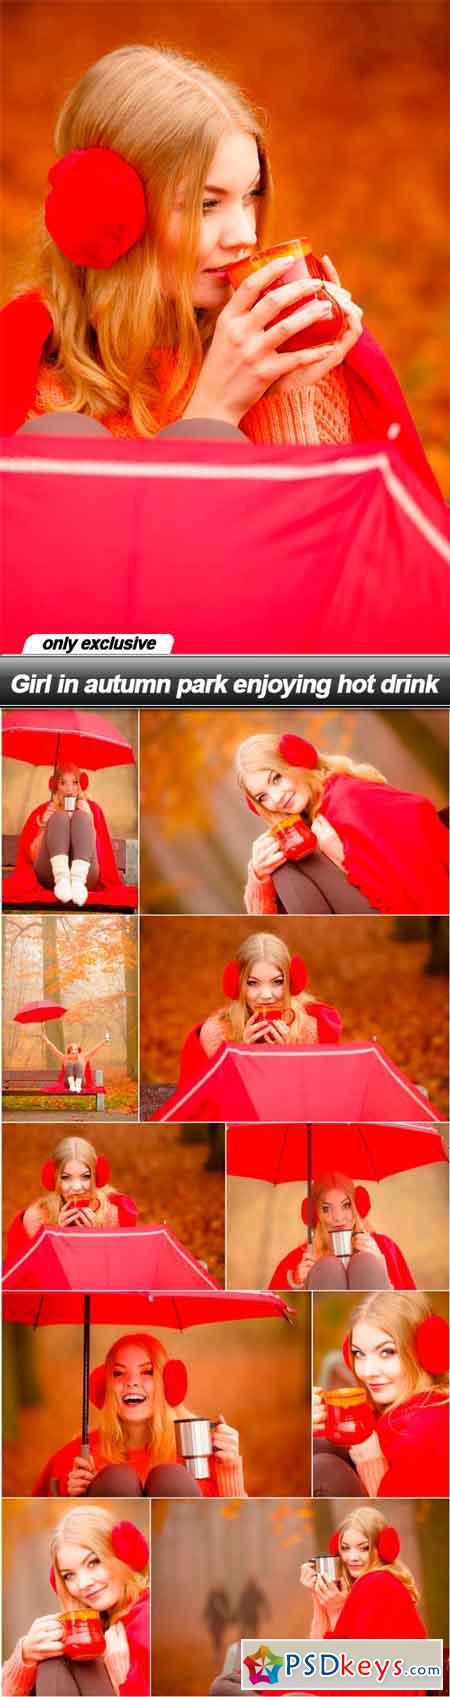 Girl in autumn park enjoying hot drink - 11 UHQ JPEG